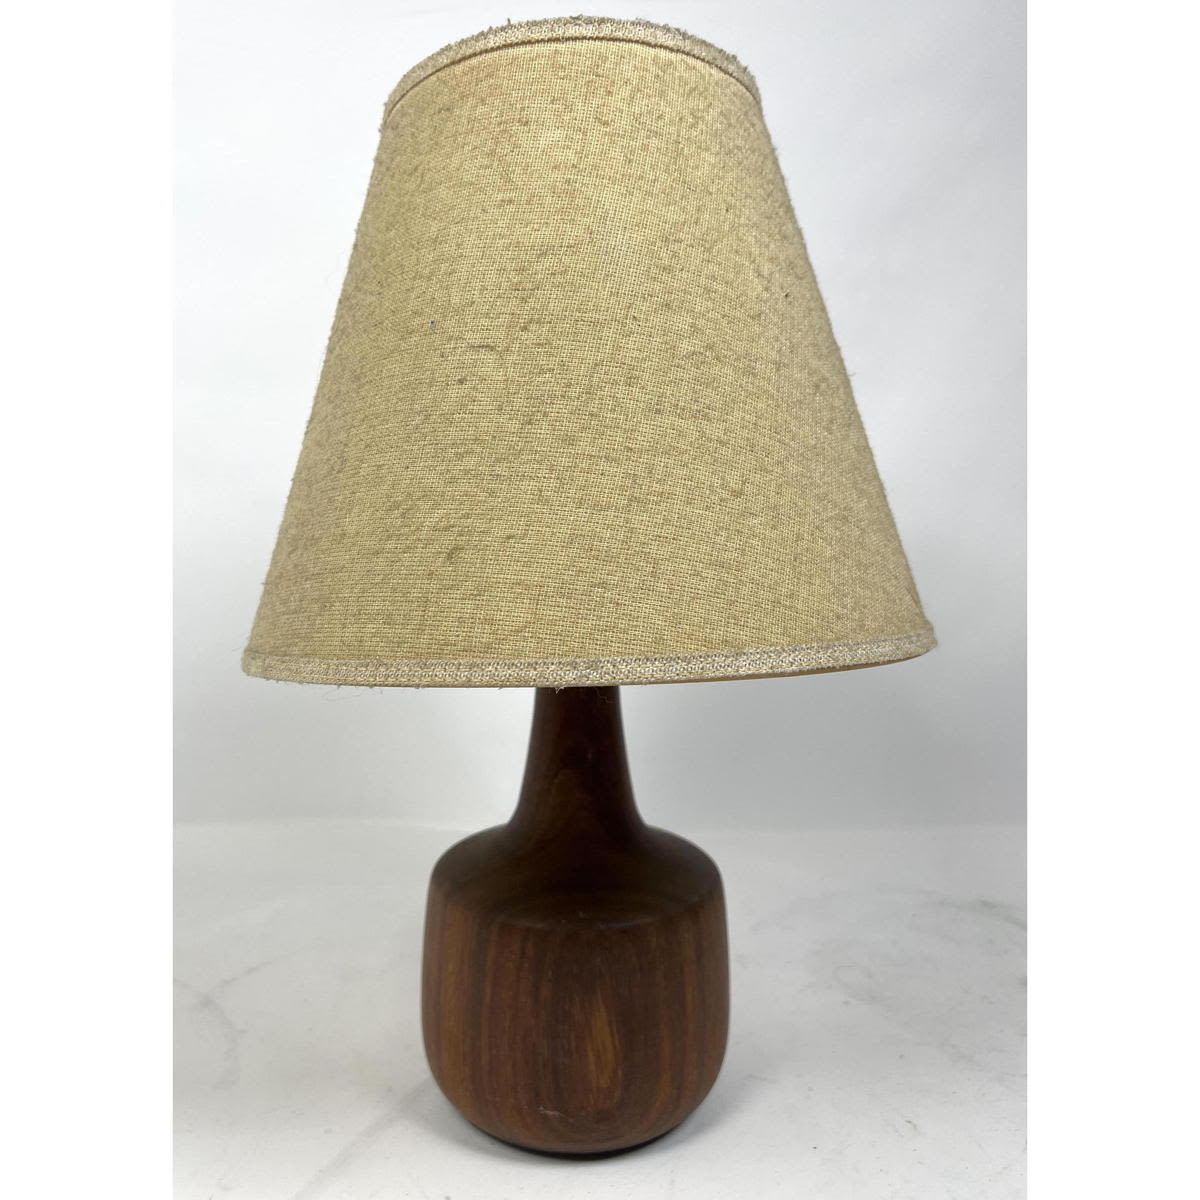 Modernist Wood Table Lamp Period 2b82fb